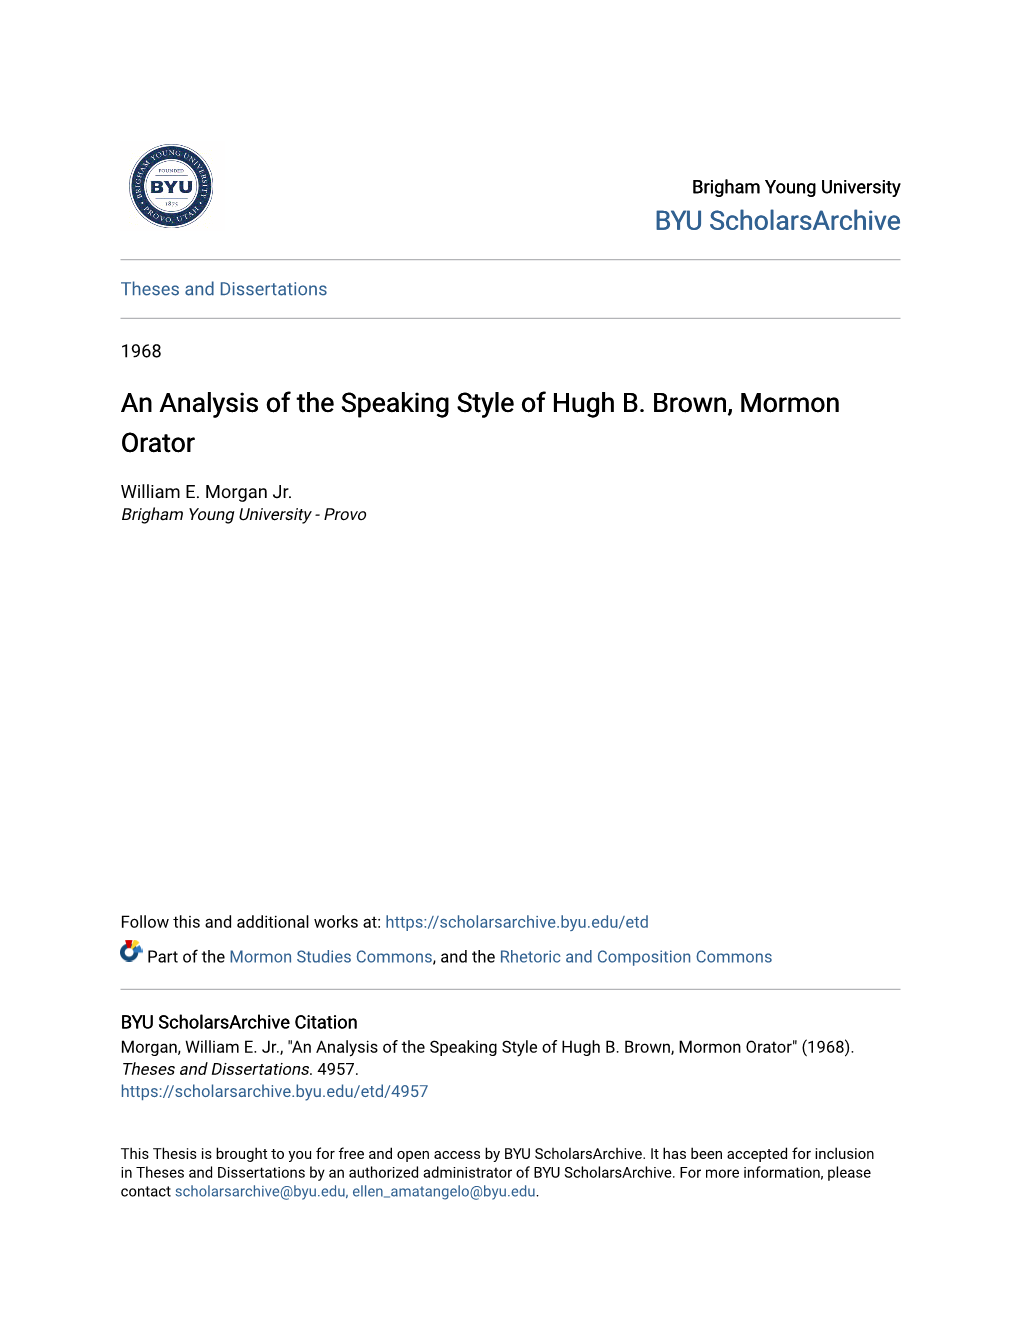 An Analysis of the Speaking Style of Hugh B. Brown, Mormon Orator